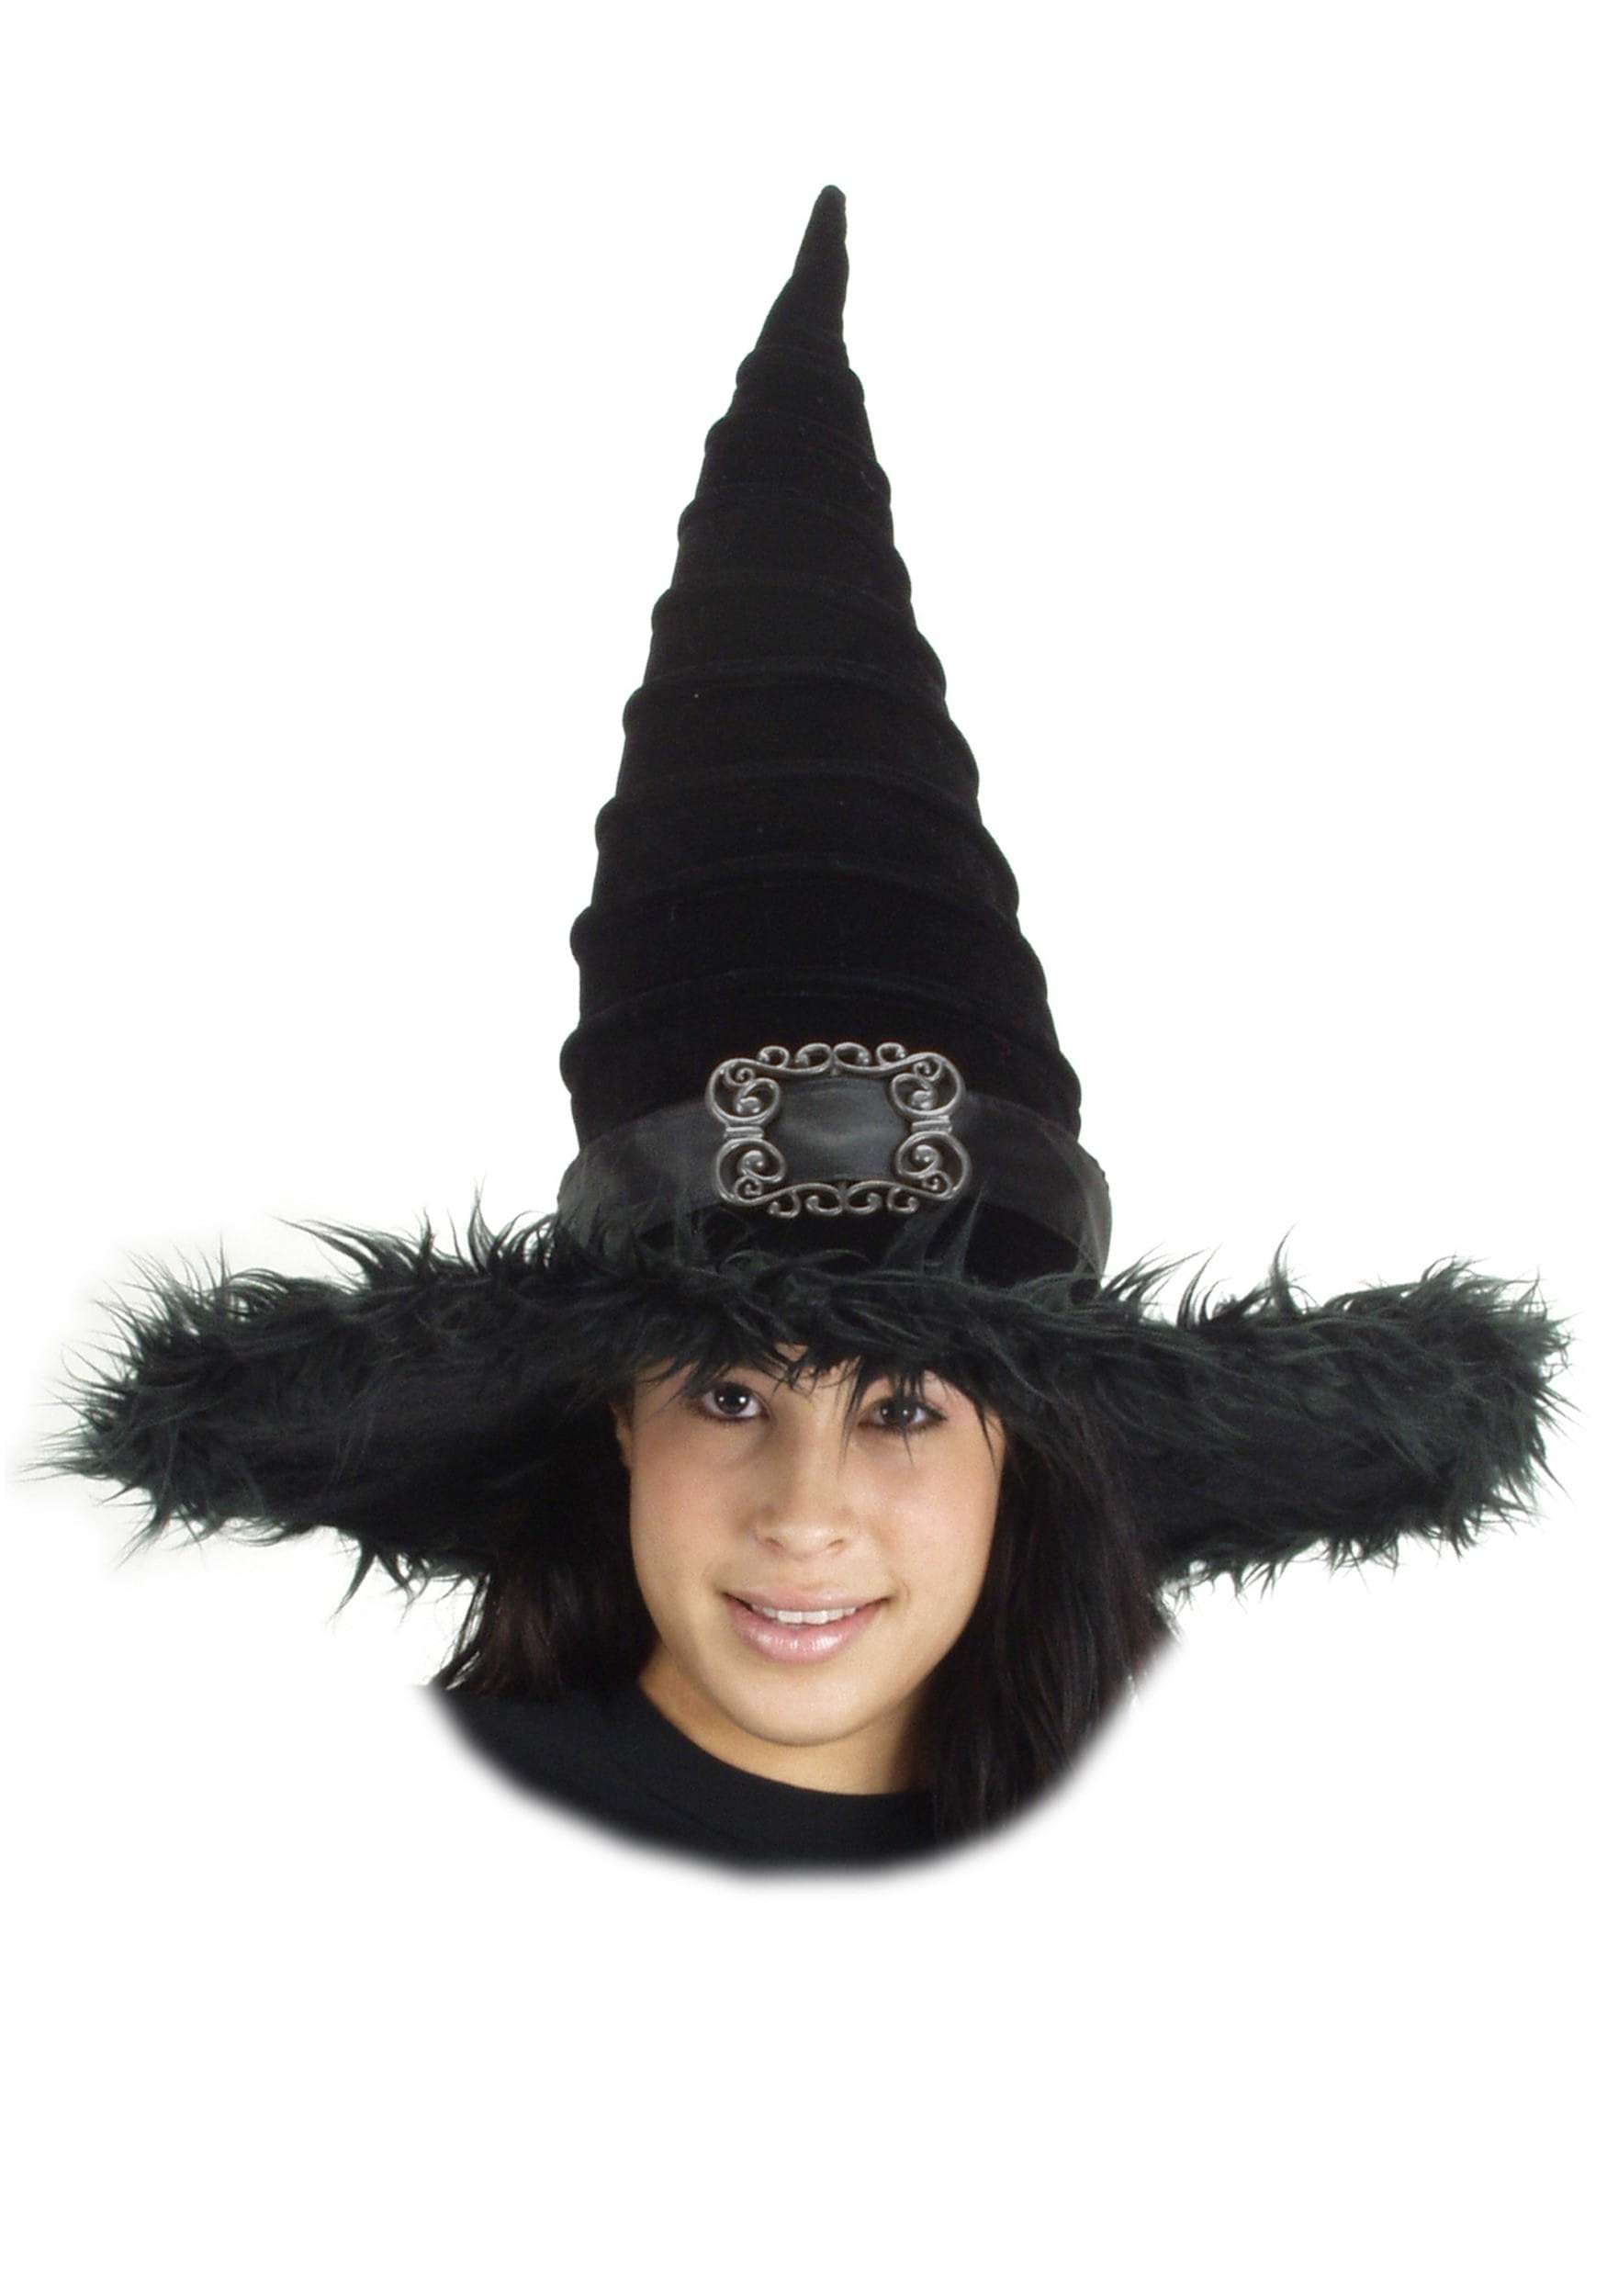 Black Ridged Witch Costume Hat